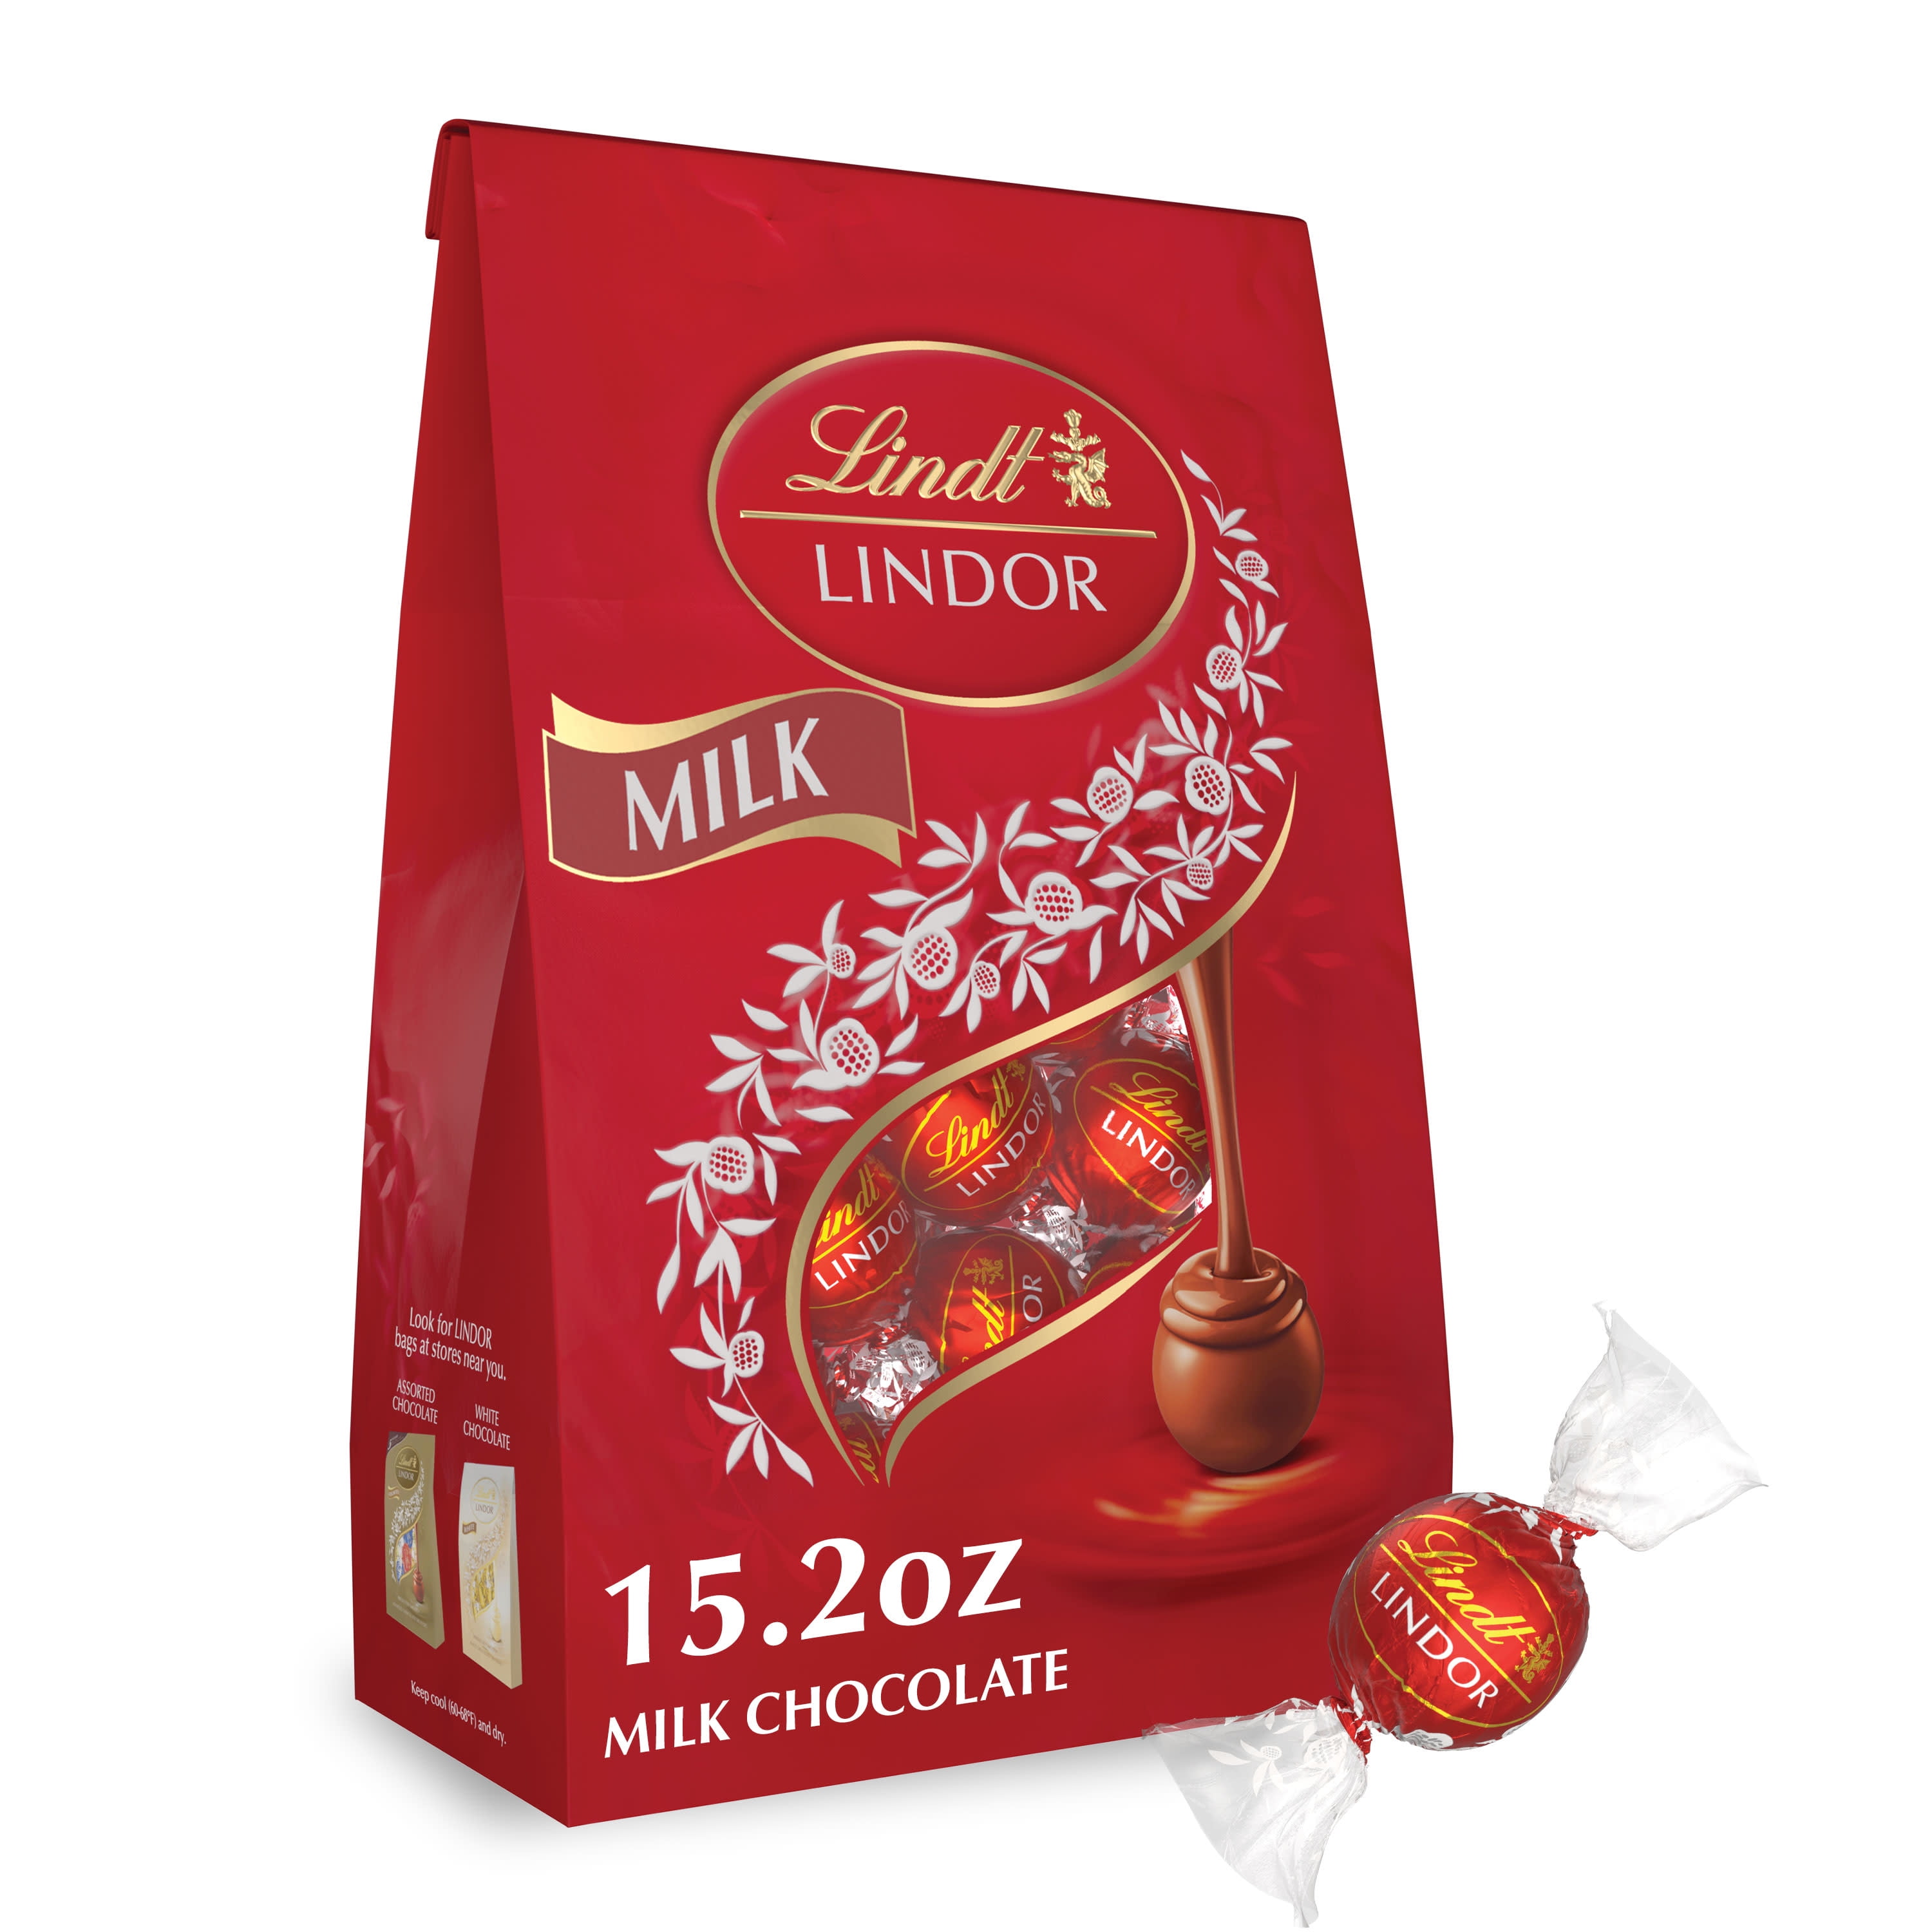 Lindt LINDOR Milk Chocolate Candy Truffles, Valentine's Day